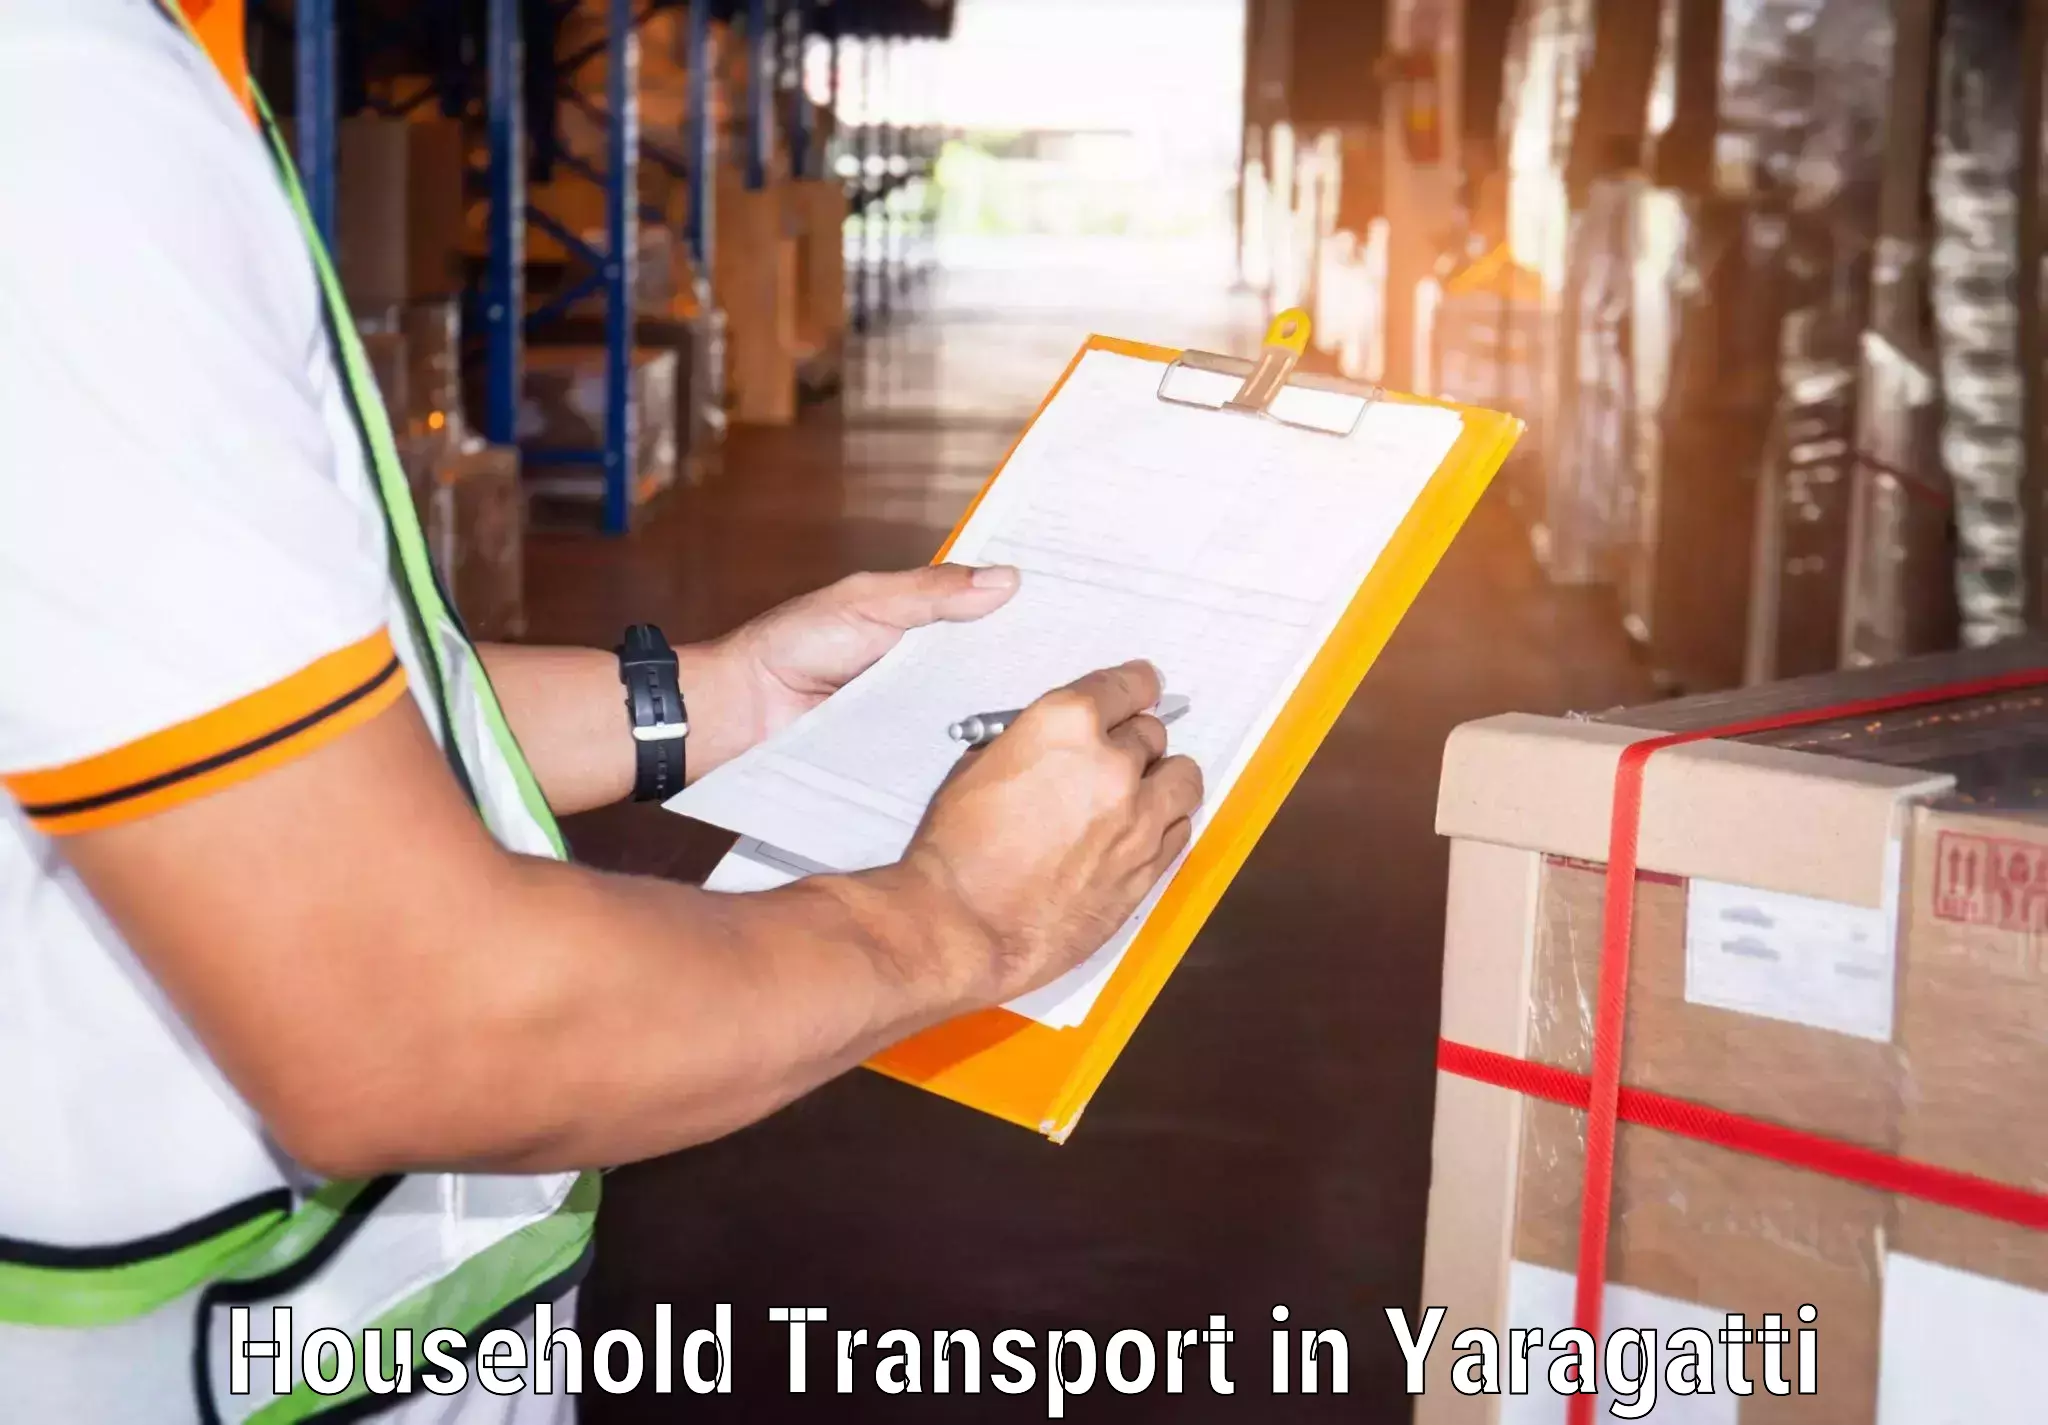 Household goods shipping in Yaragatti